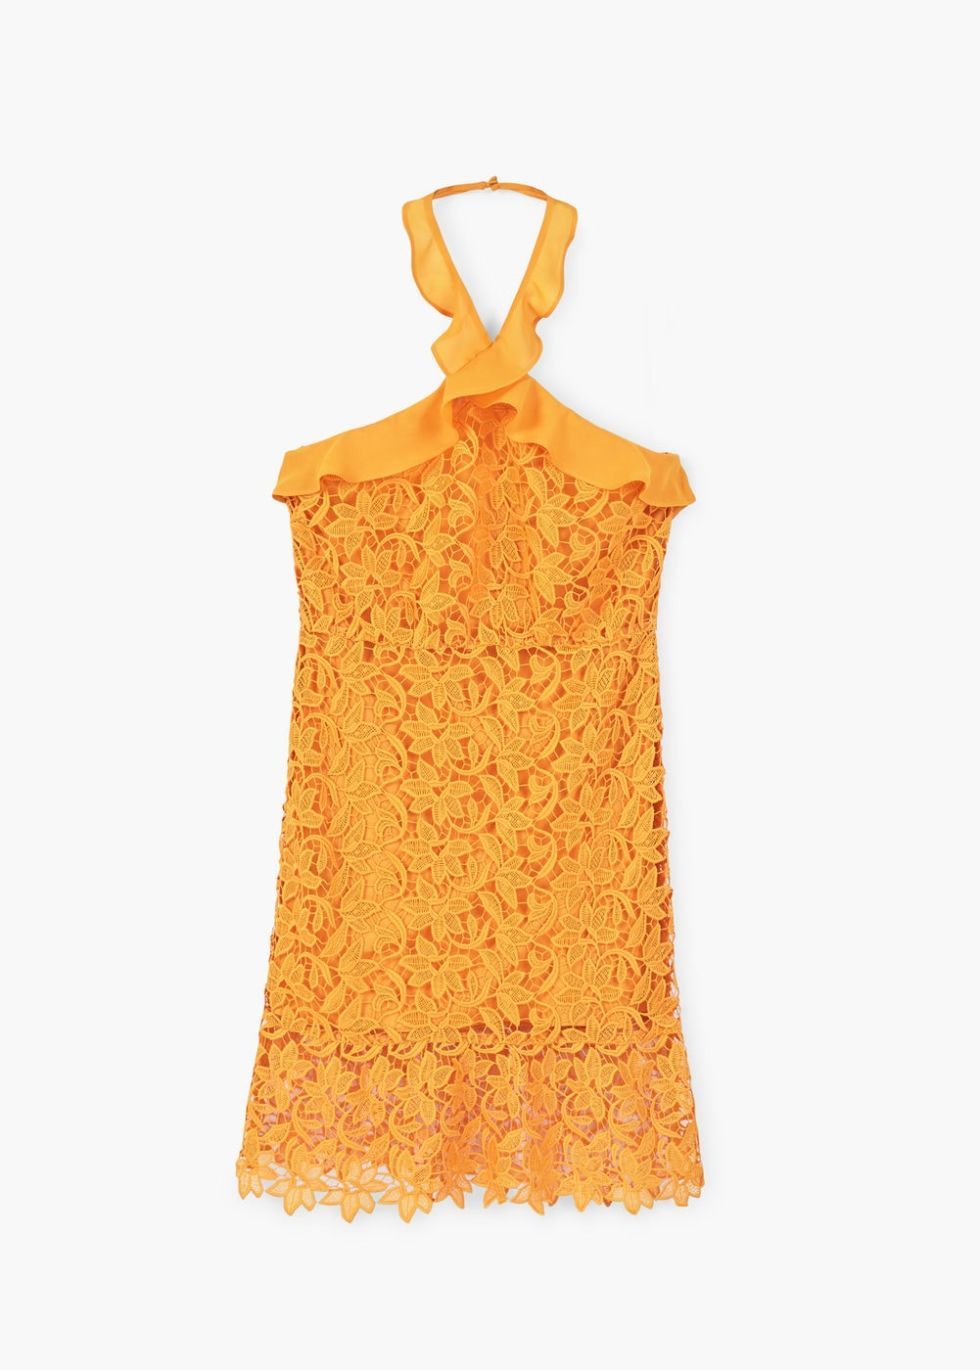 Clothing, Orange, Yellow, Dress, camisoles, Sleeveless shirt, Blouse, Crop top, Outerwear, Day dress, 